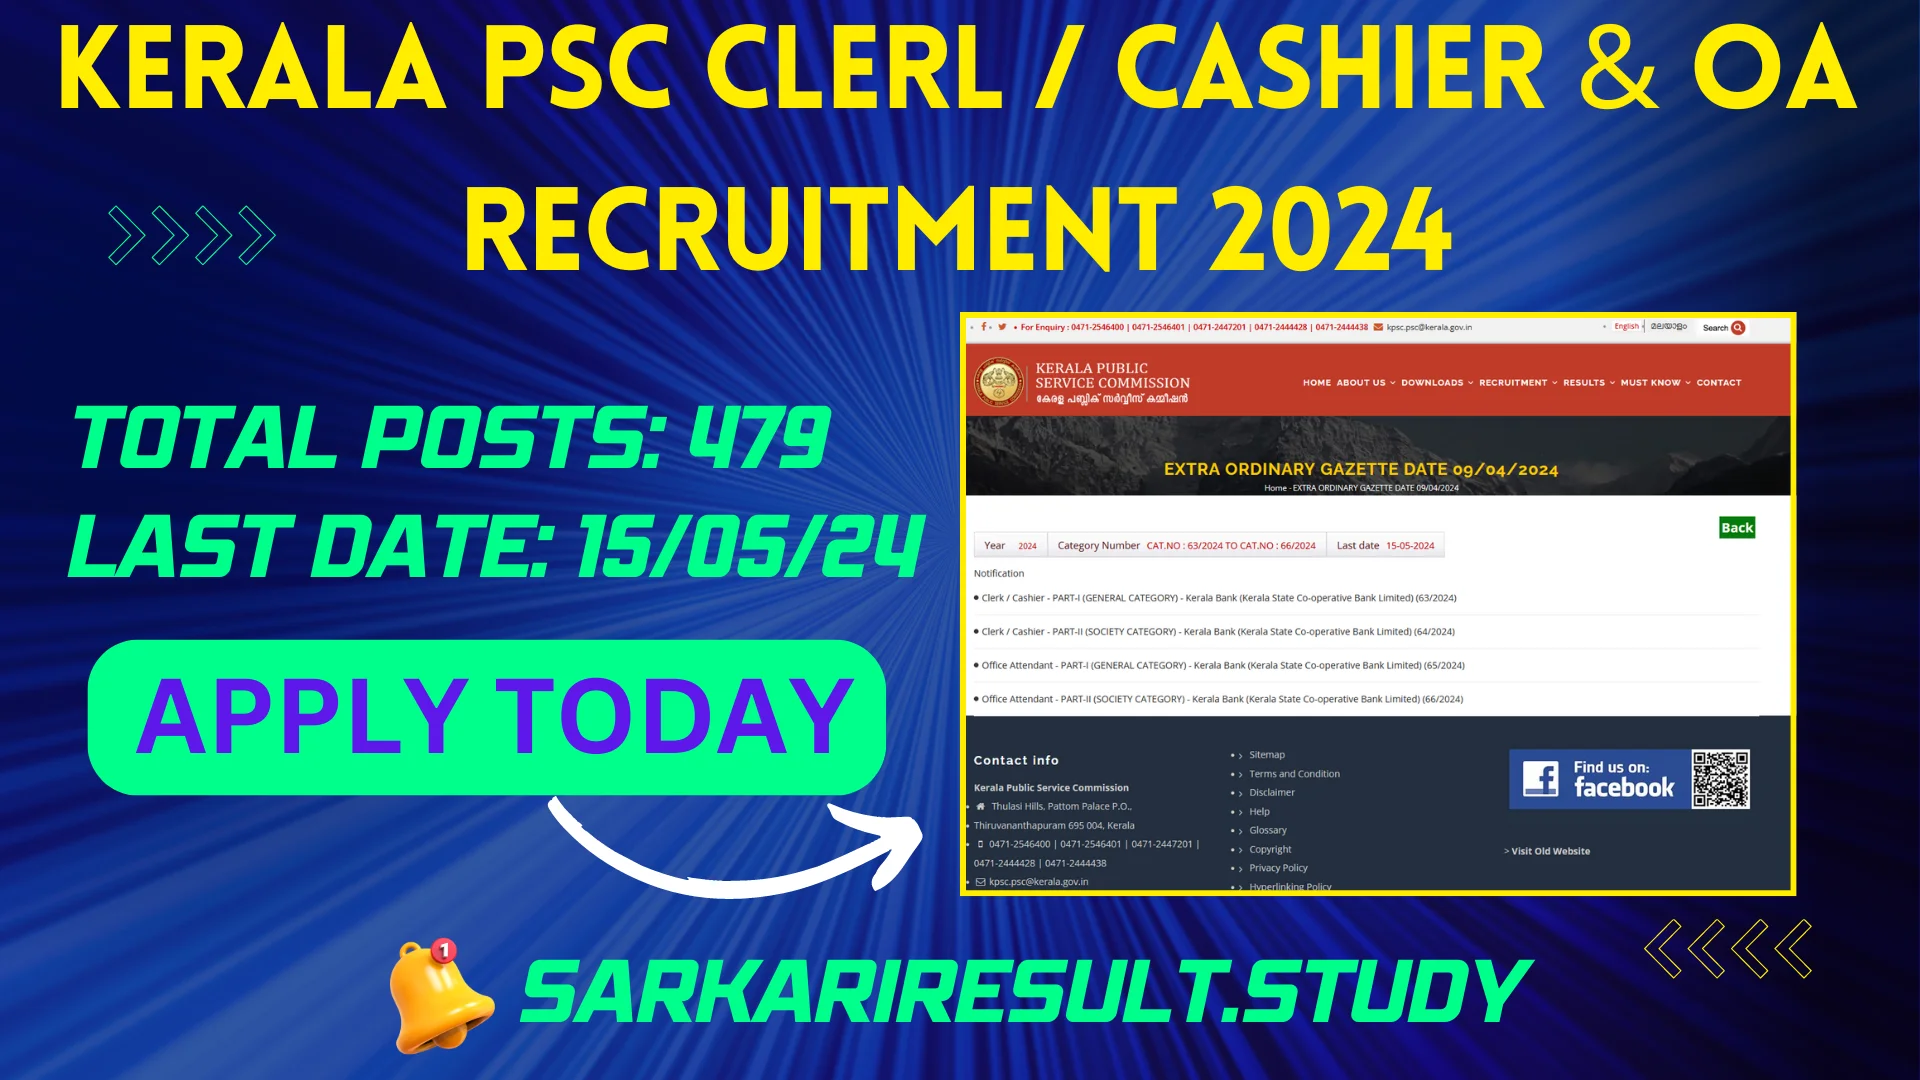 Kerala PSC Clerl / Cashier & OA Recruitment 2024